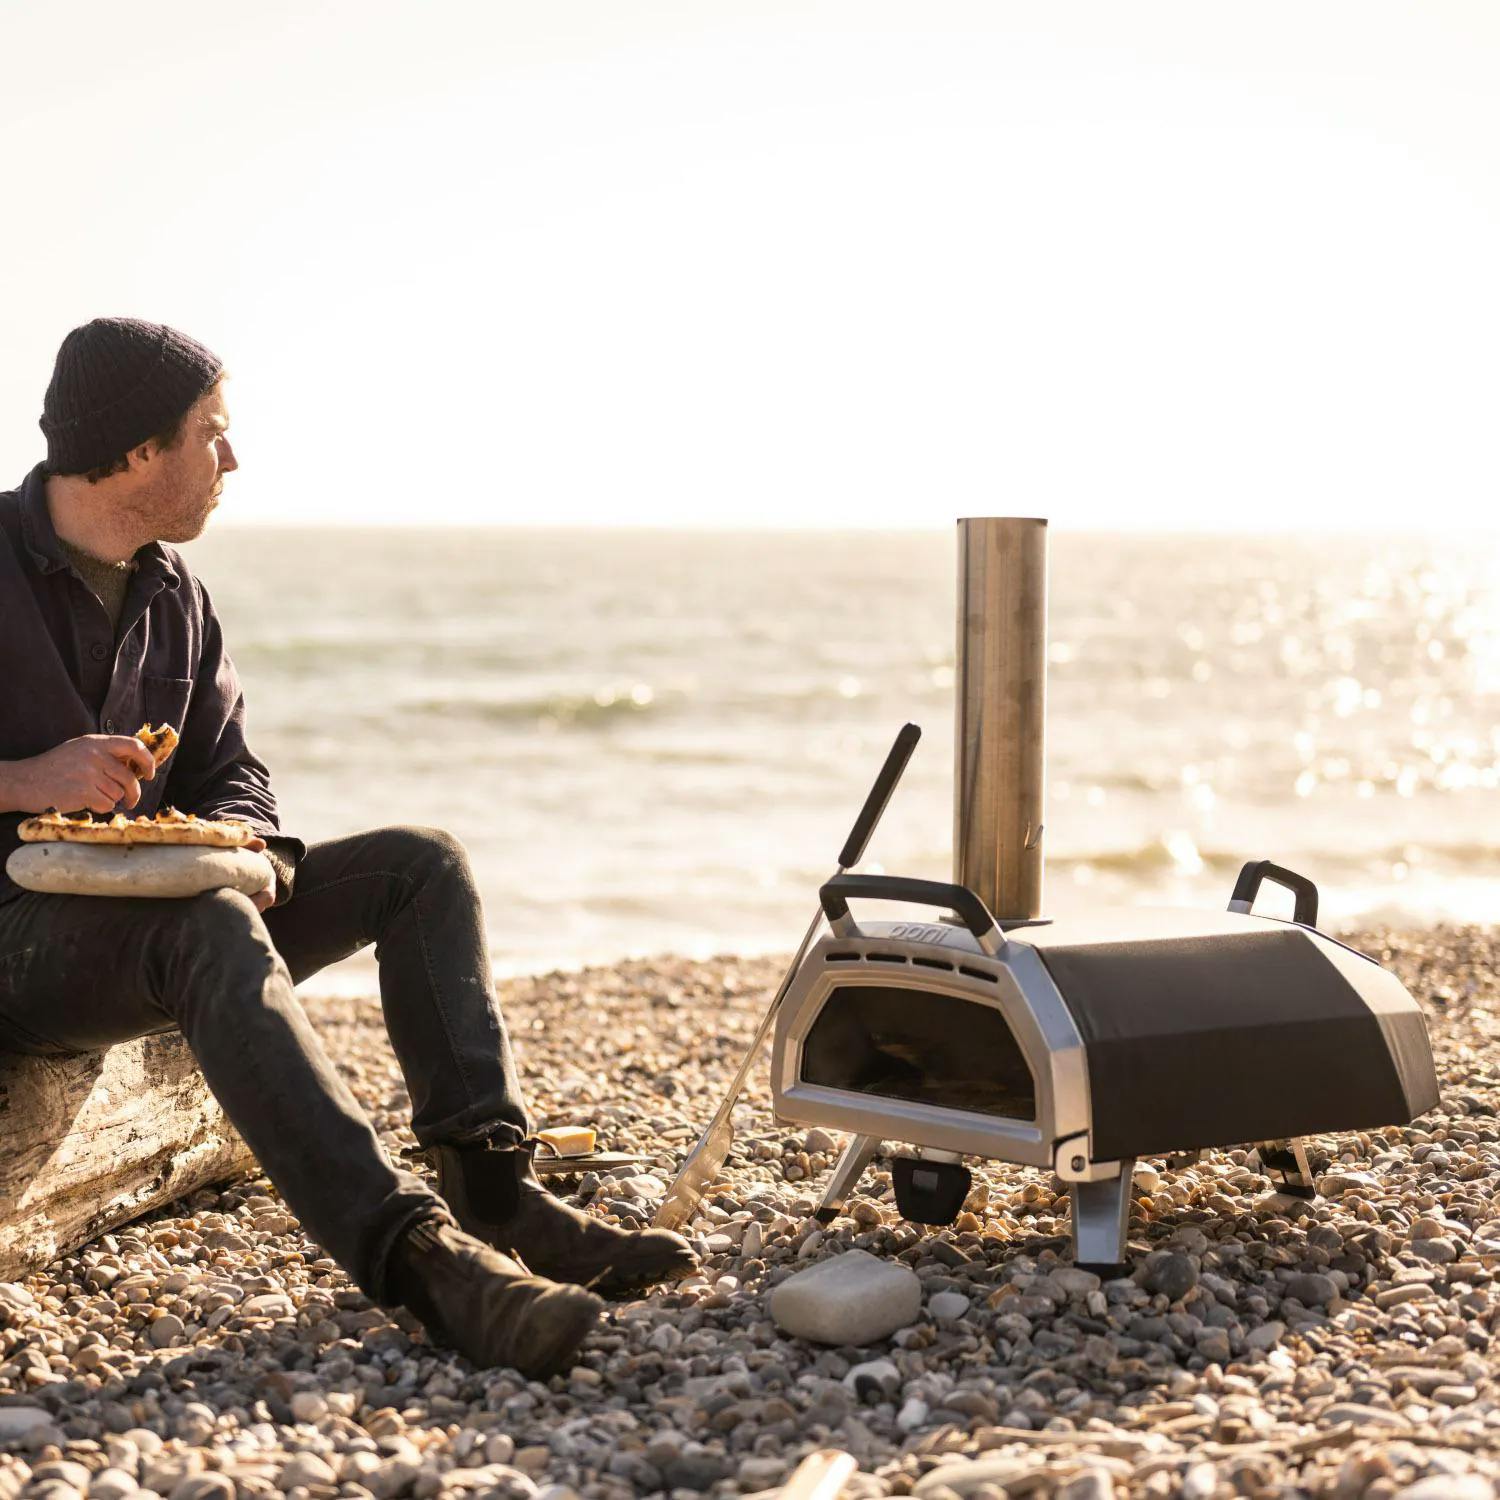 Ooni Karu Multi-Fuel Portable Outdoor Pizza Oven